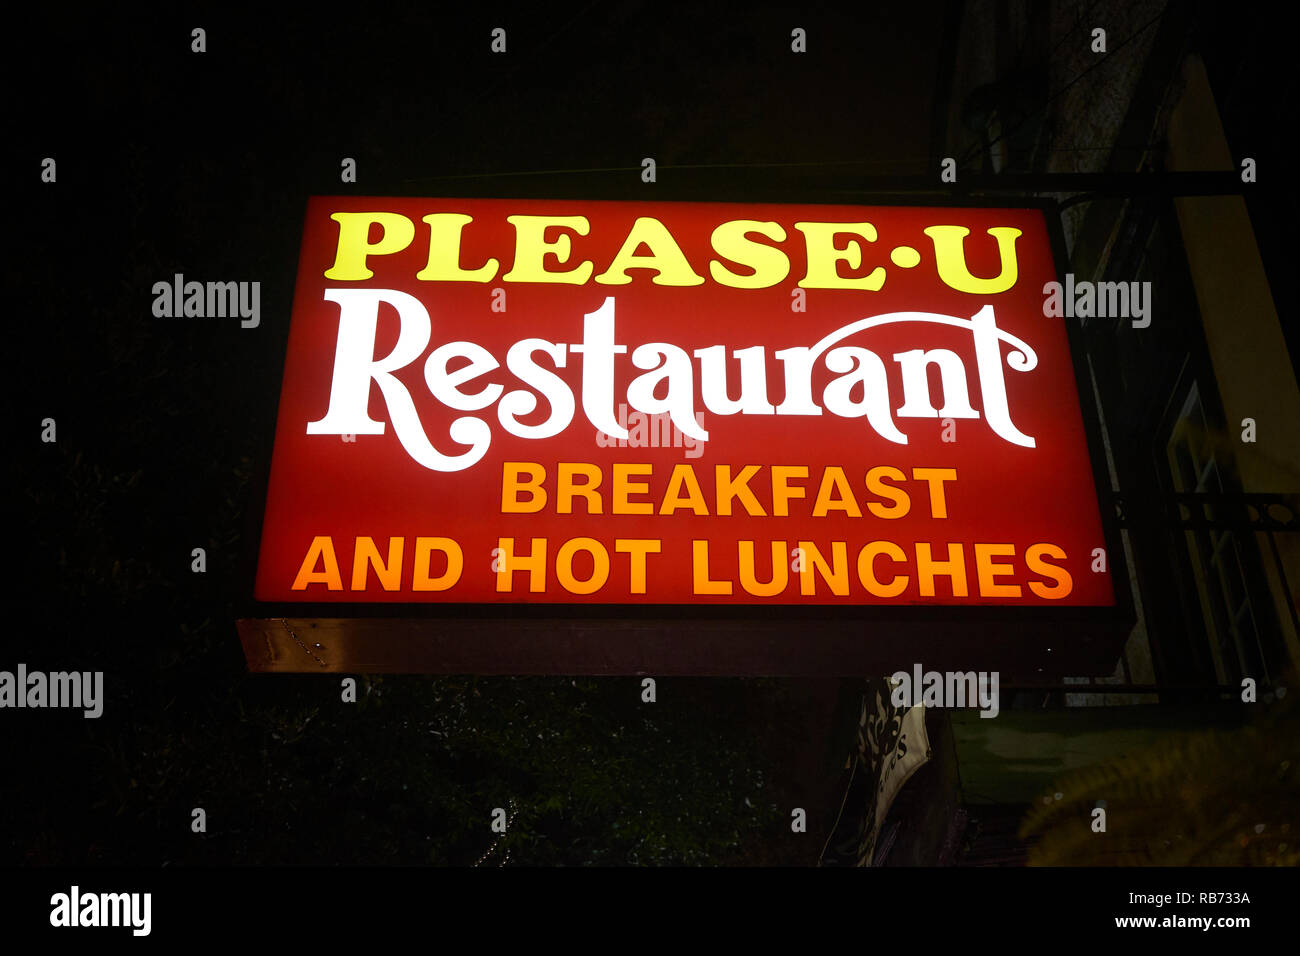 Please U restaurant, New Orleans, Louisiana. Stock Photo